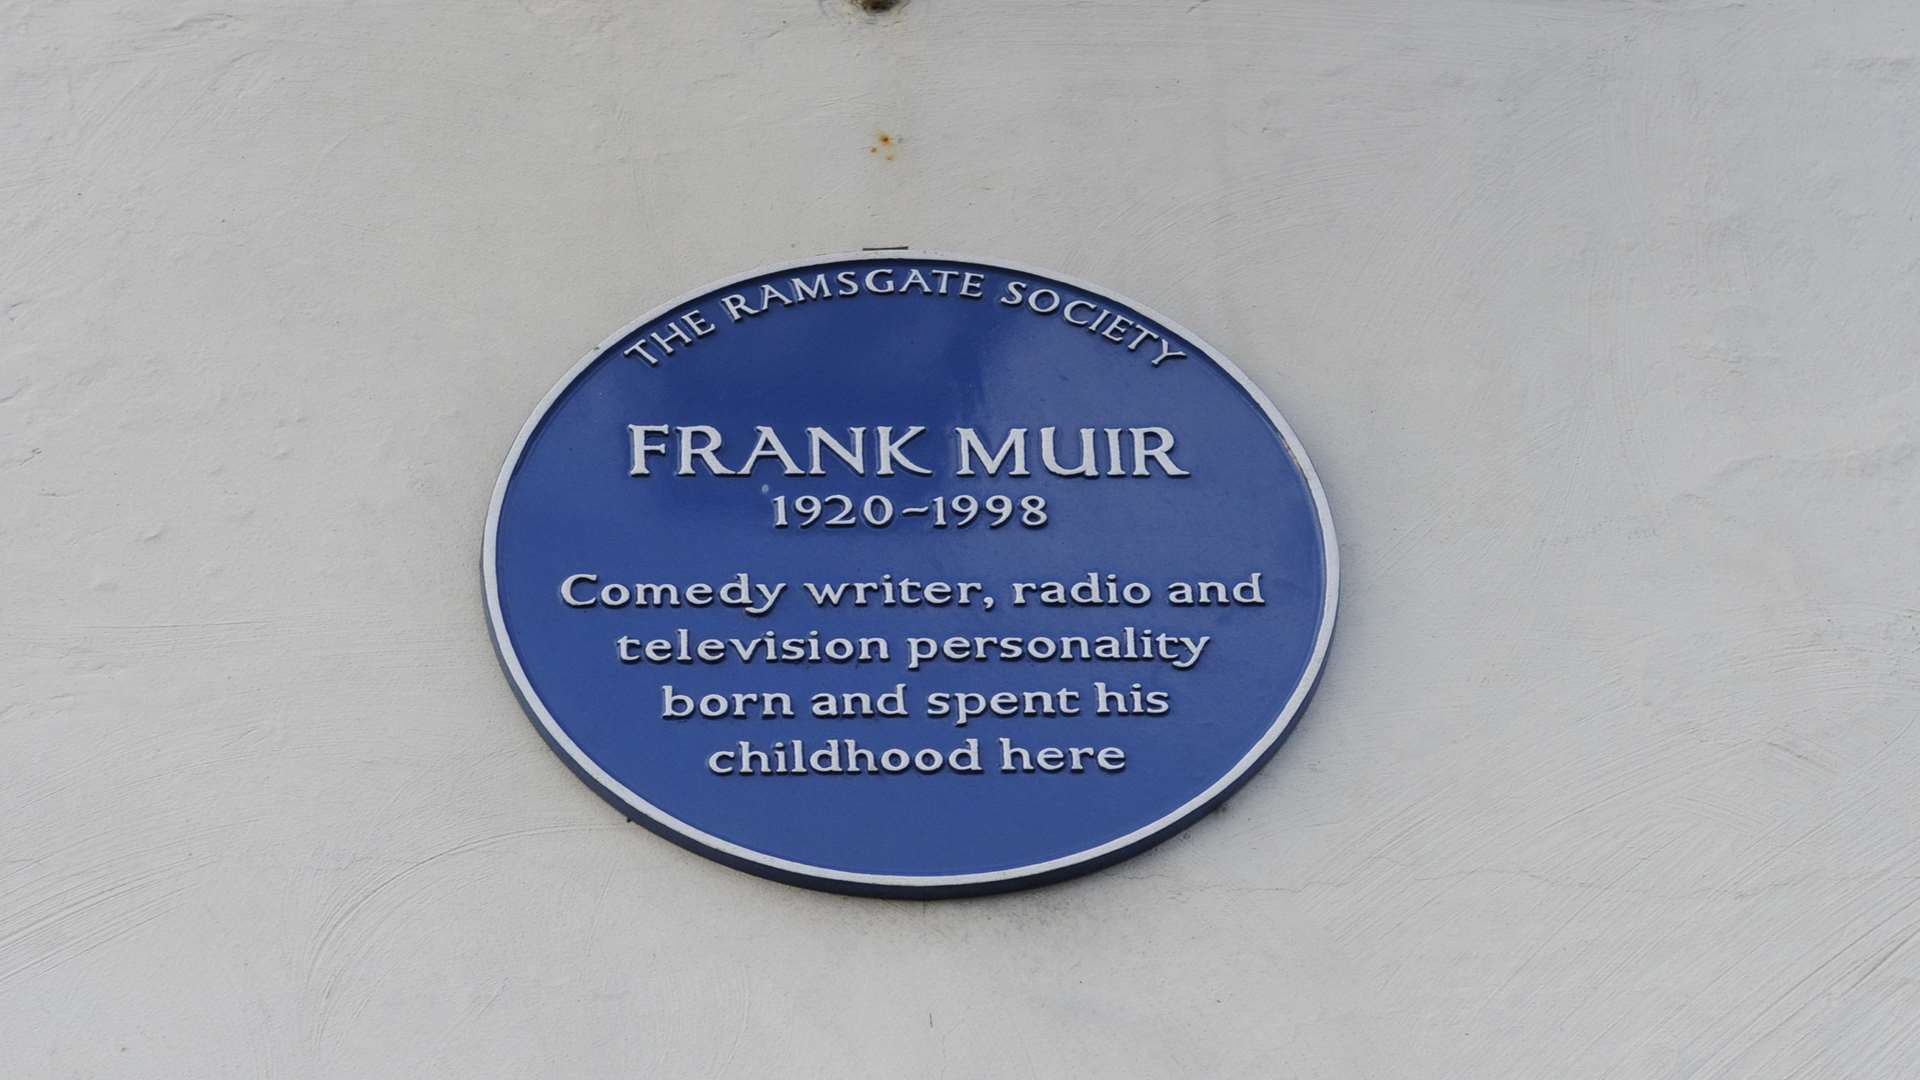 Frank Muir, Margate Road, Ramsgate